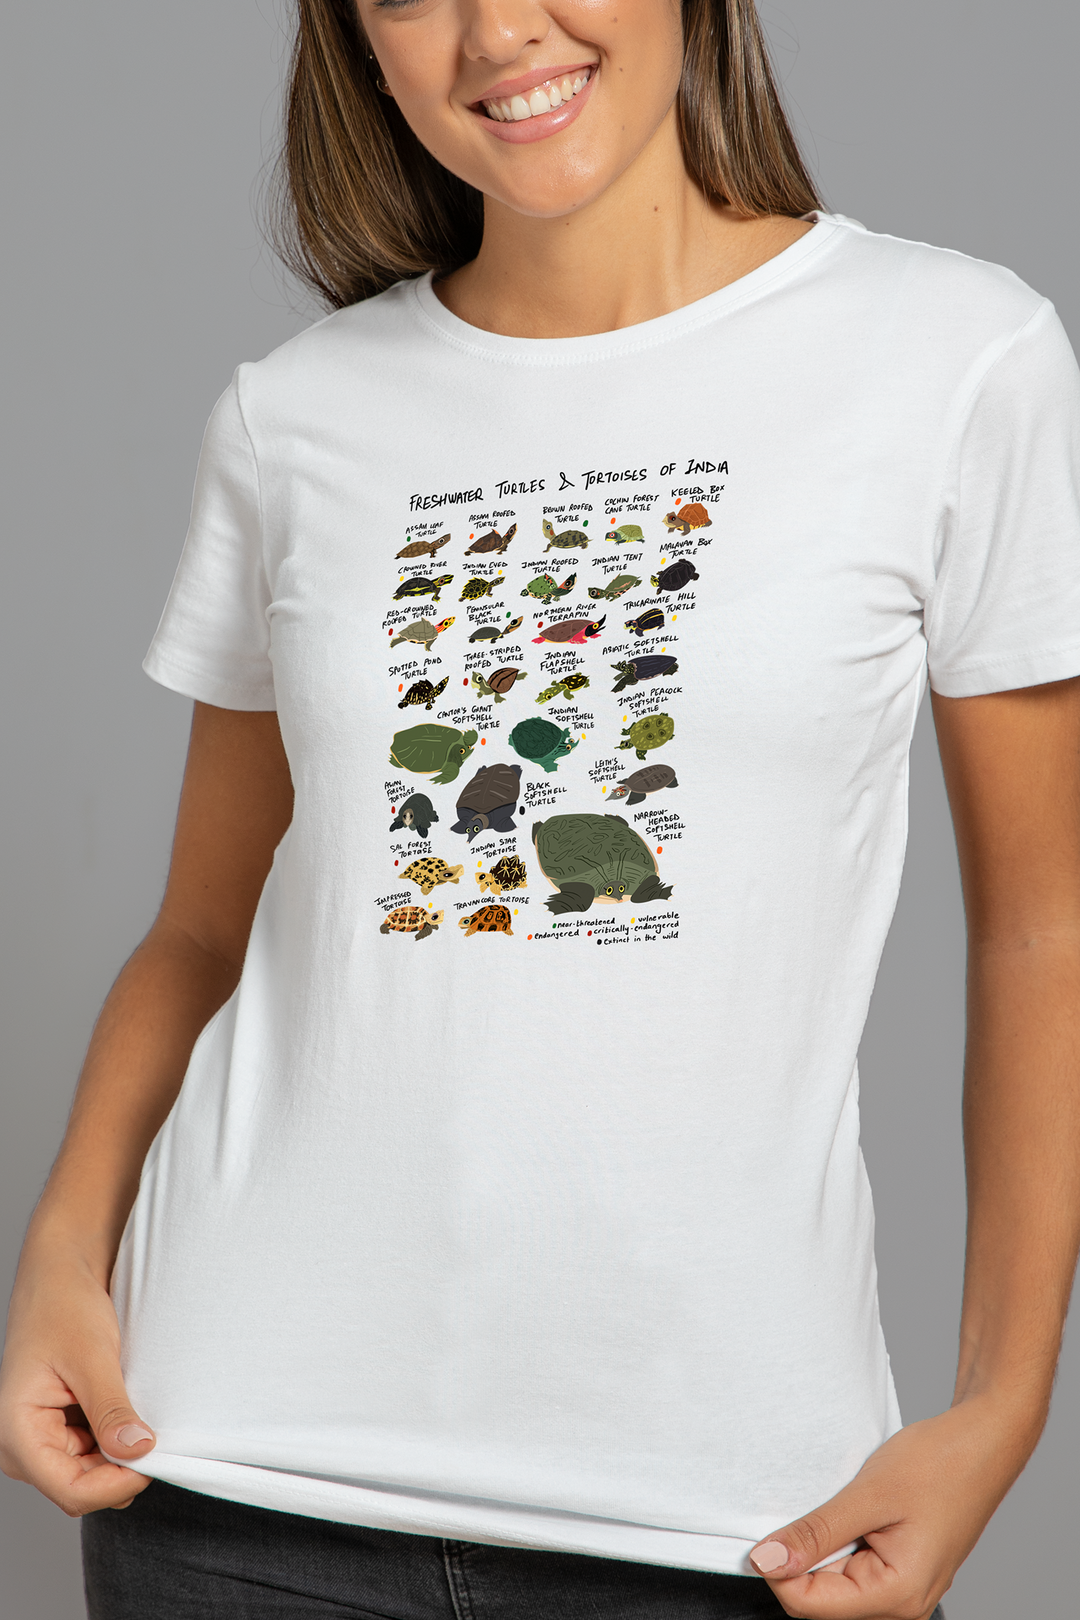 Freshwater Turtles Of India Tshirt